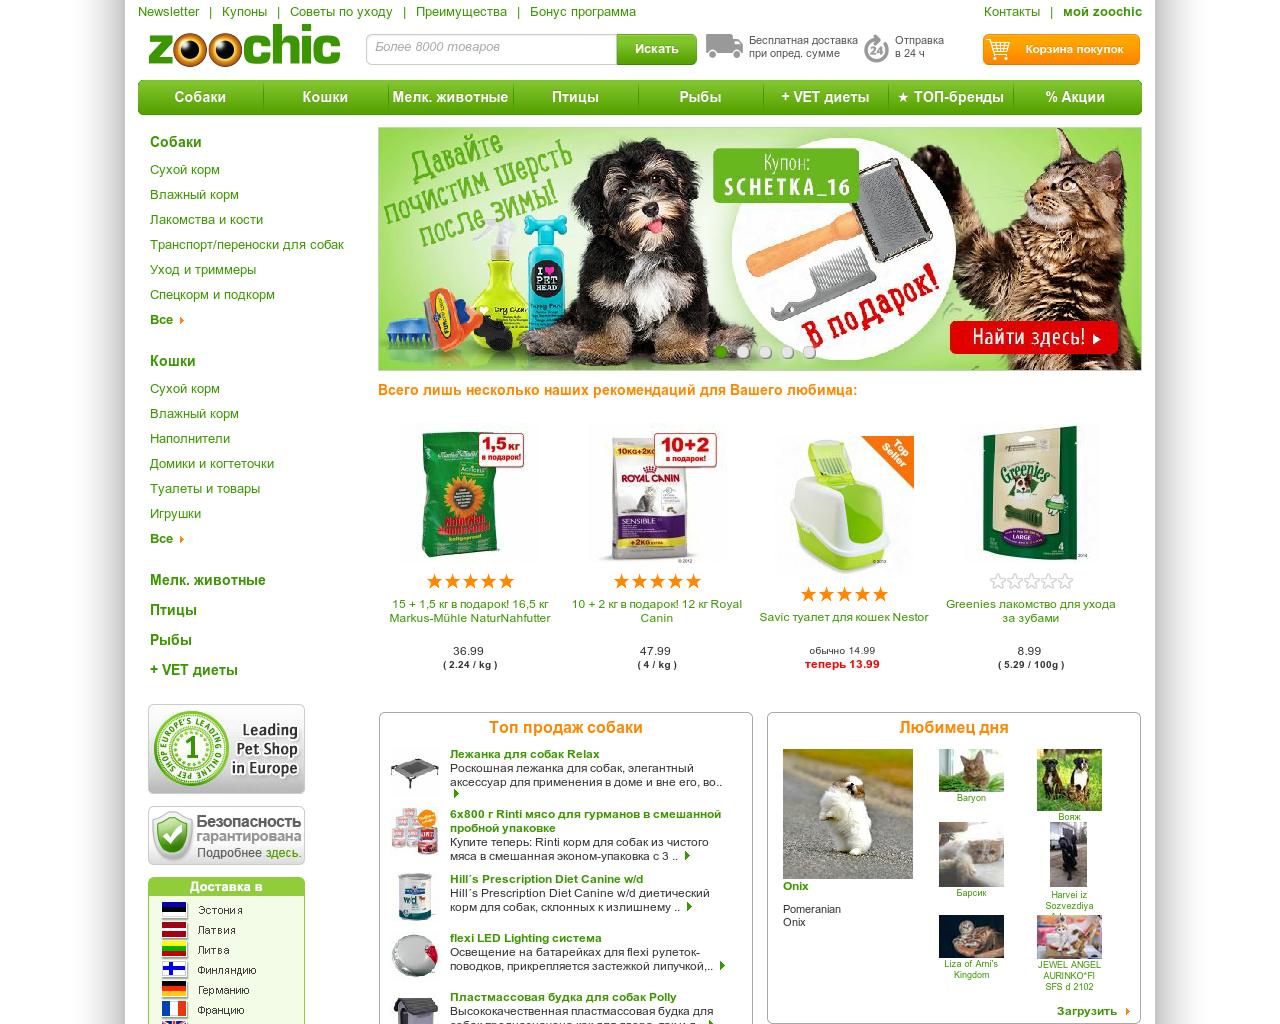 Изображение сайта zoochic.ru в разрешении 1280x1024